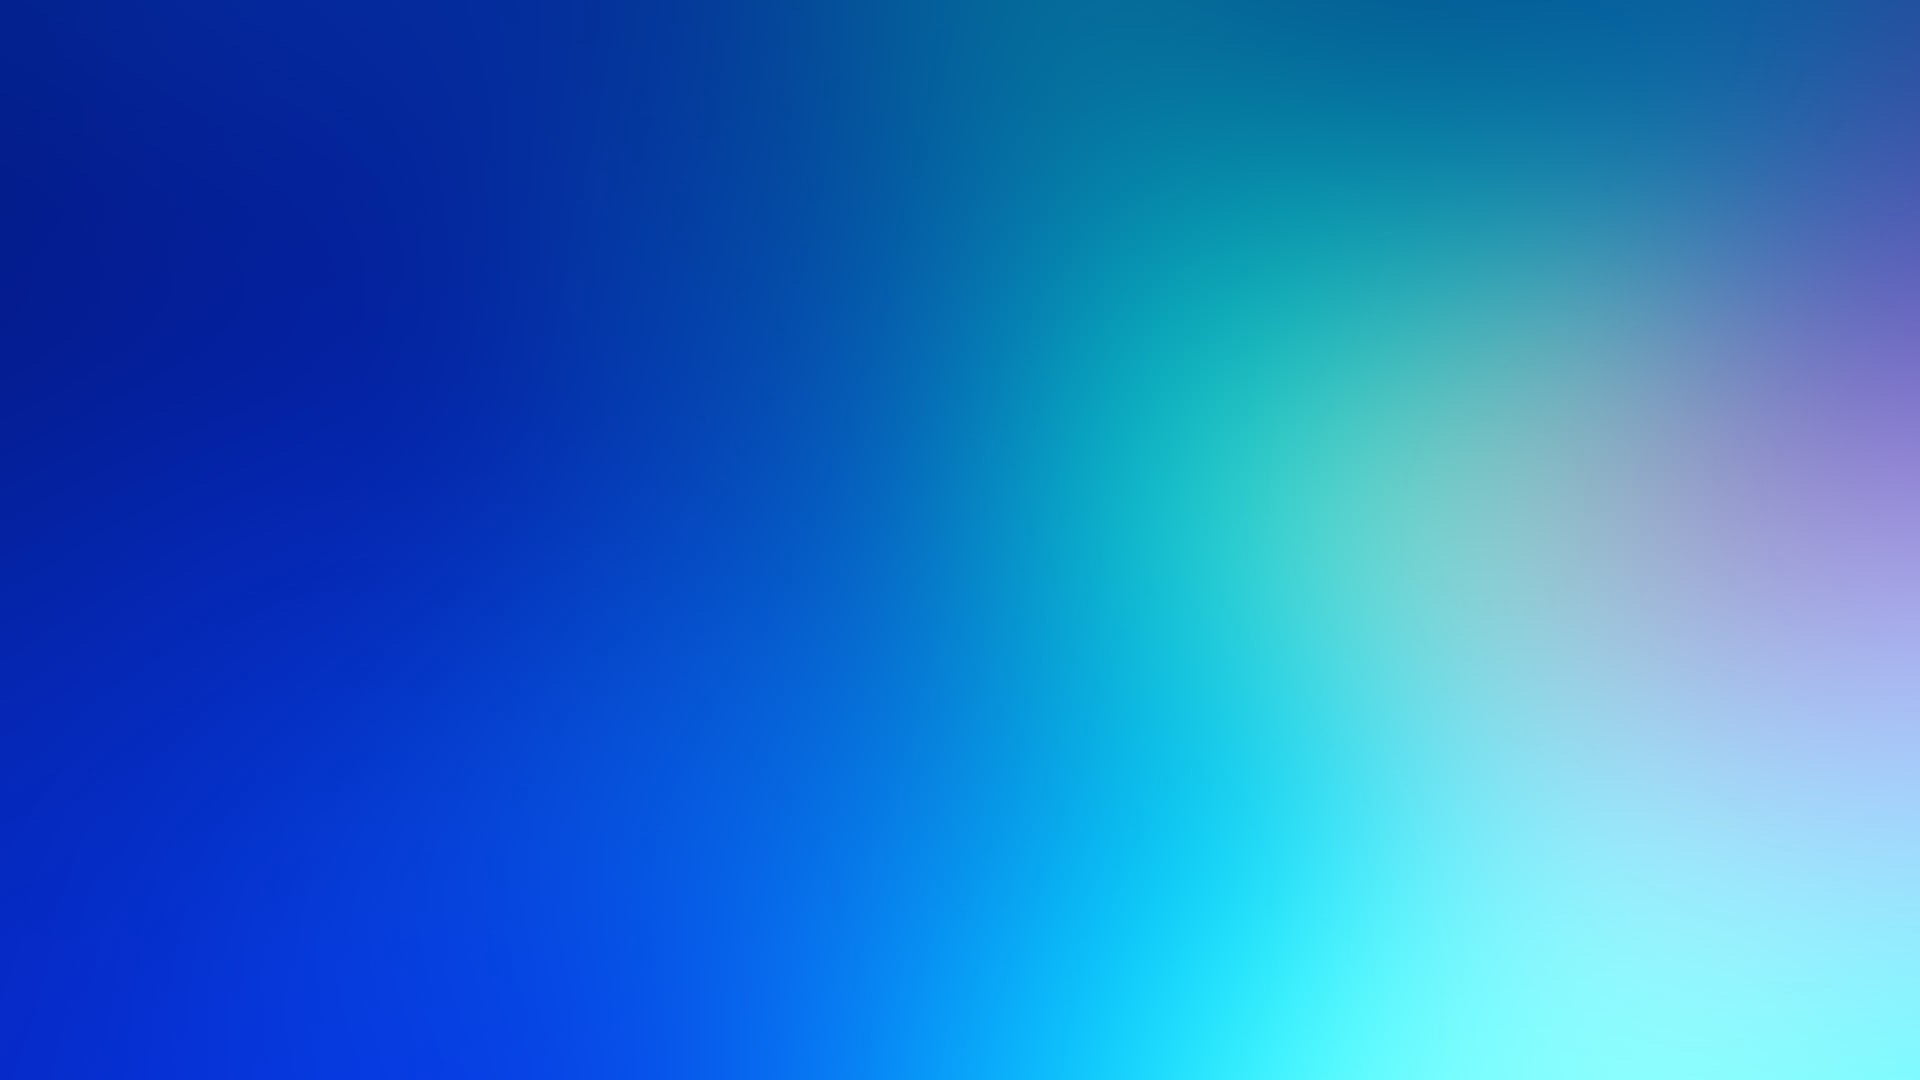 colorful, blurred, Windows 7, gradient, blue background, minimalism